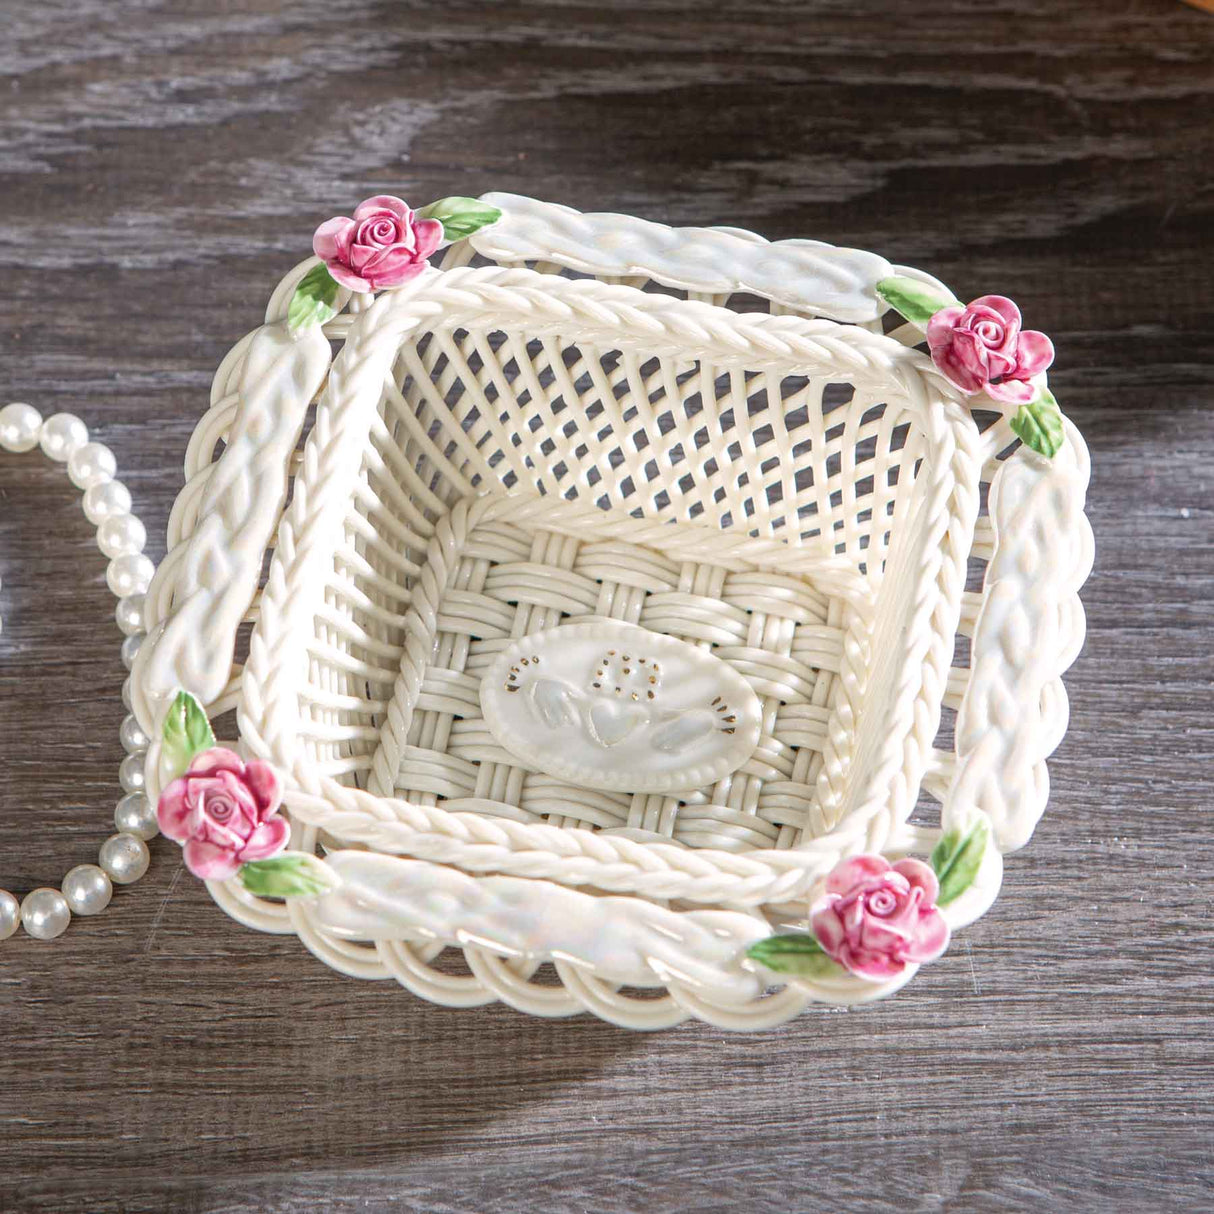 Belleek Claddagh Friendship Basket - Creative Irish Gifts